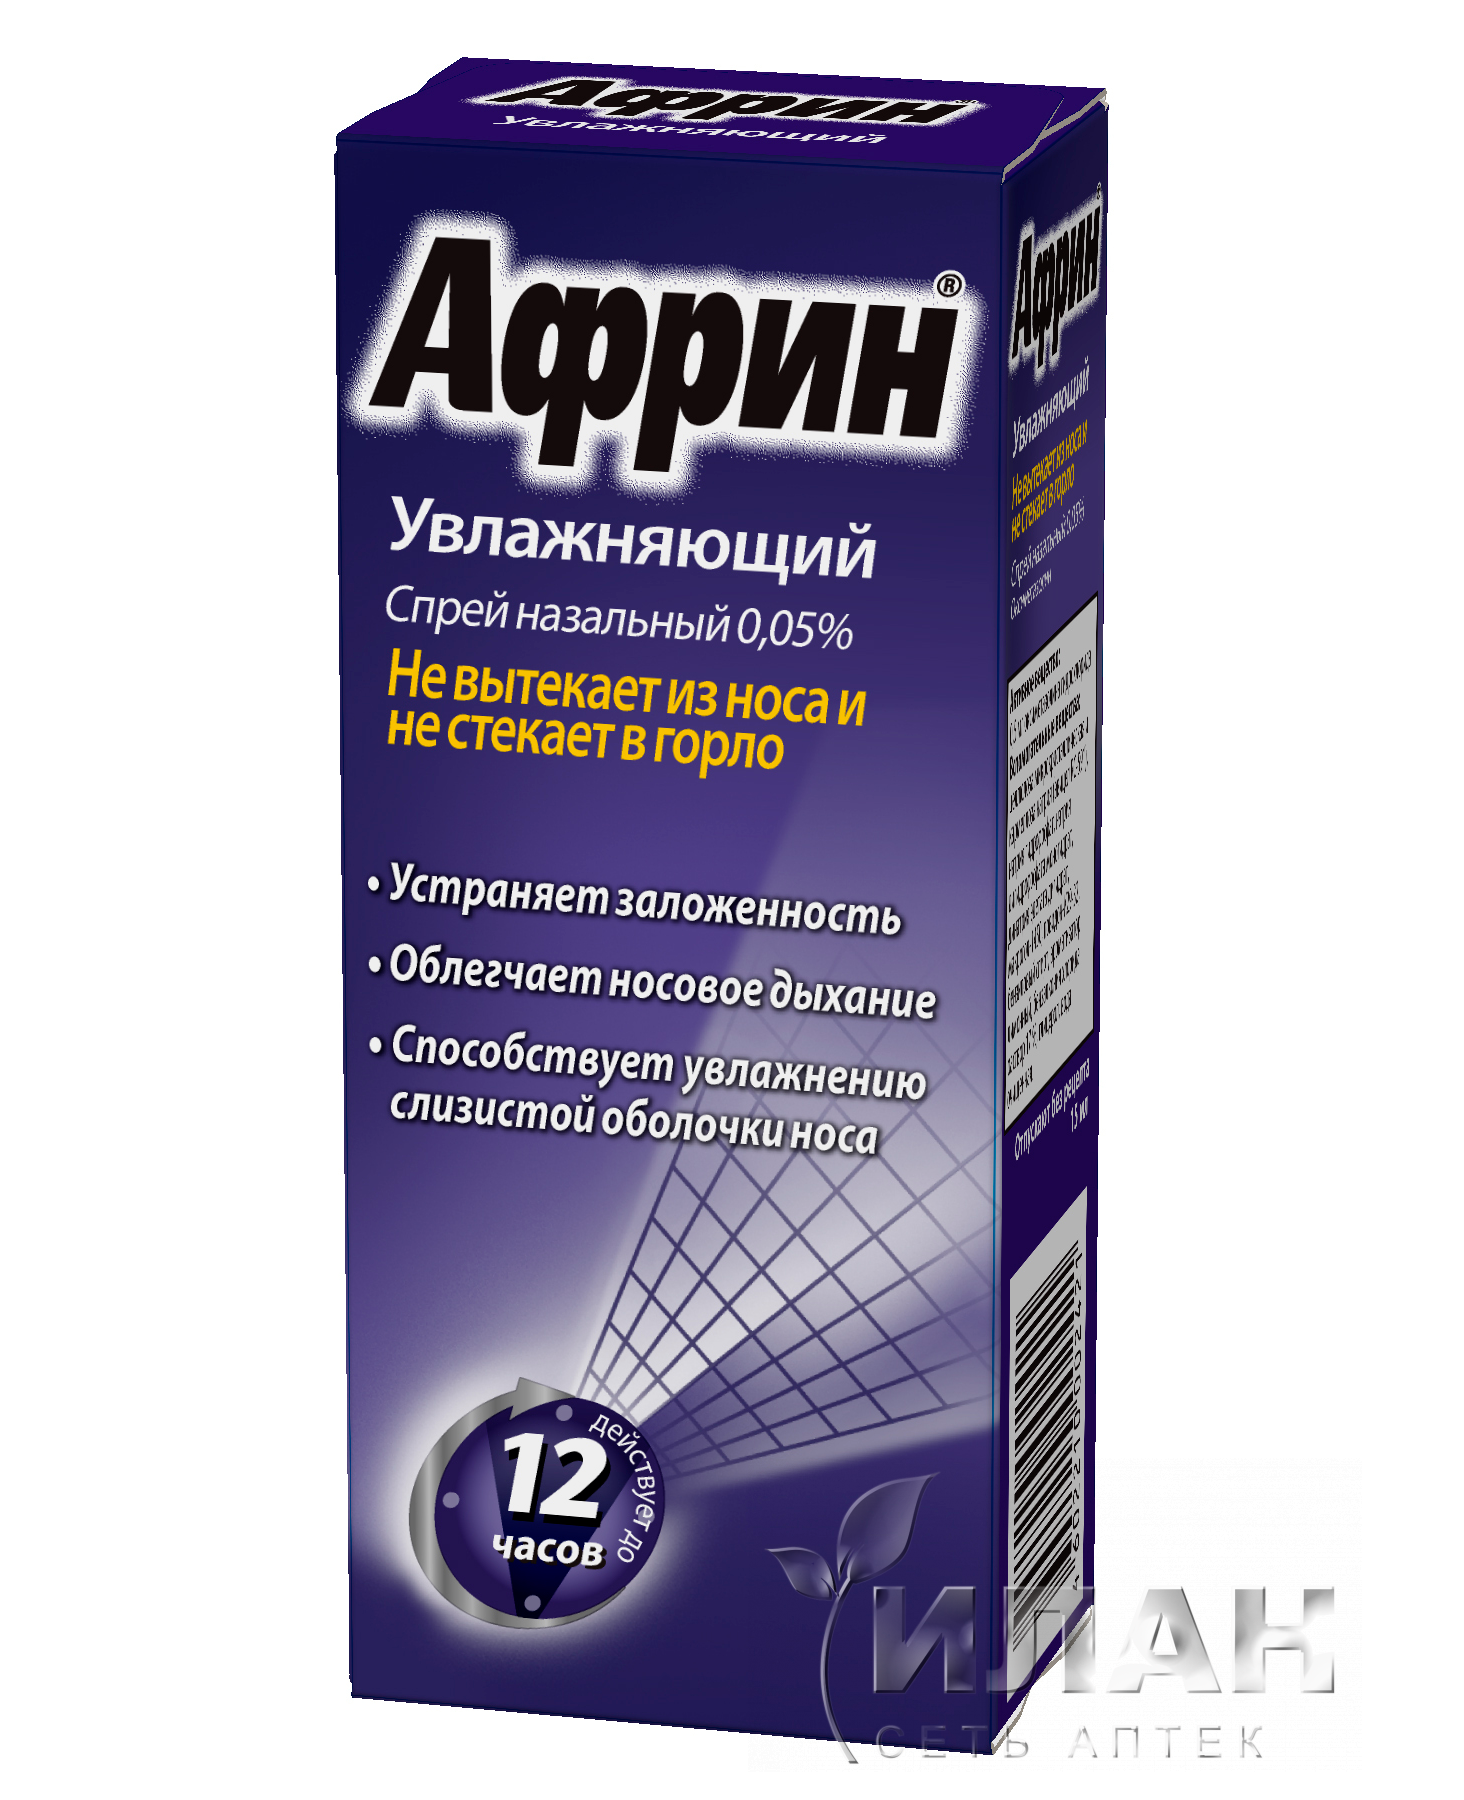 Африн увлажняющий (Afrin moisturizing)